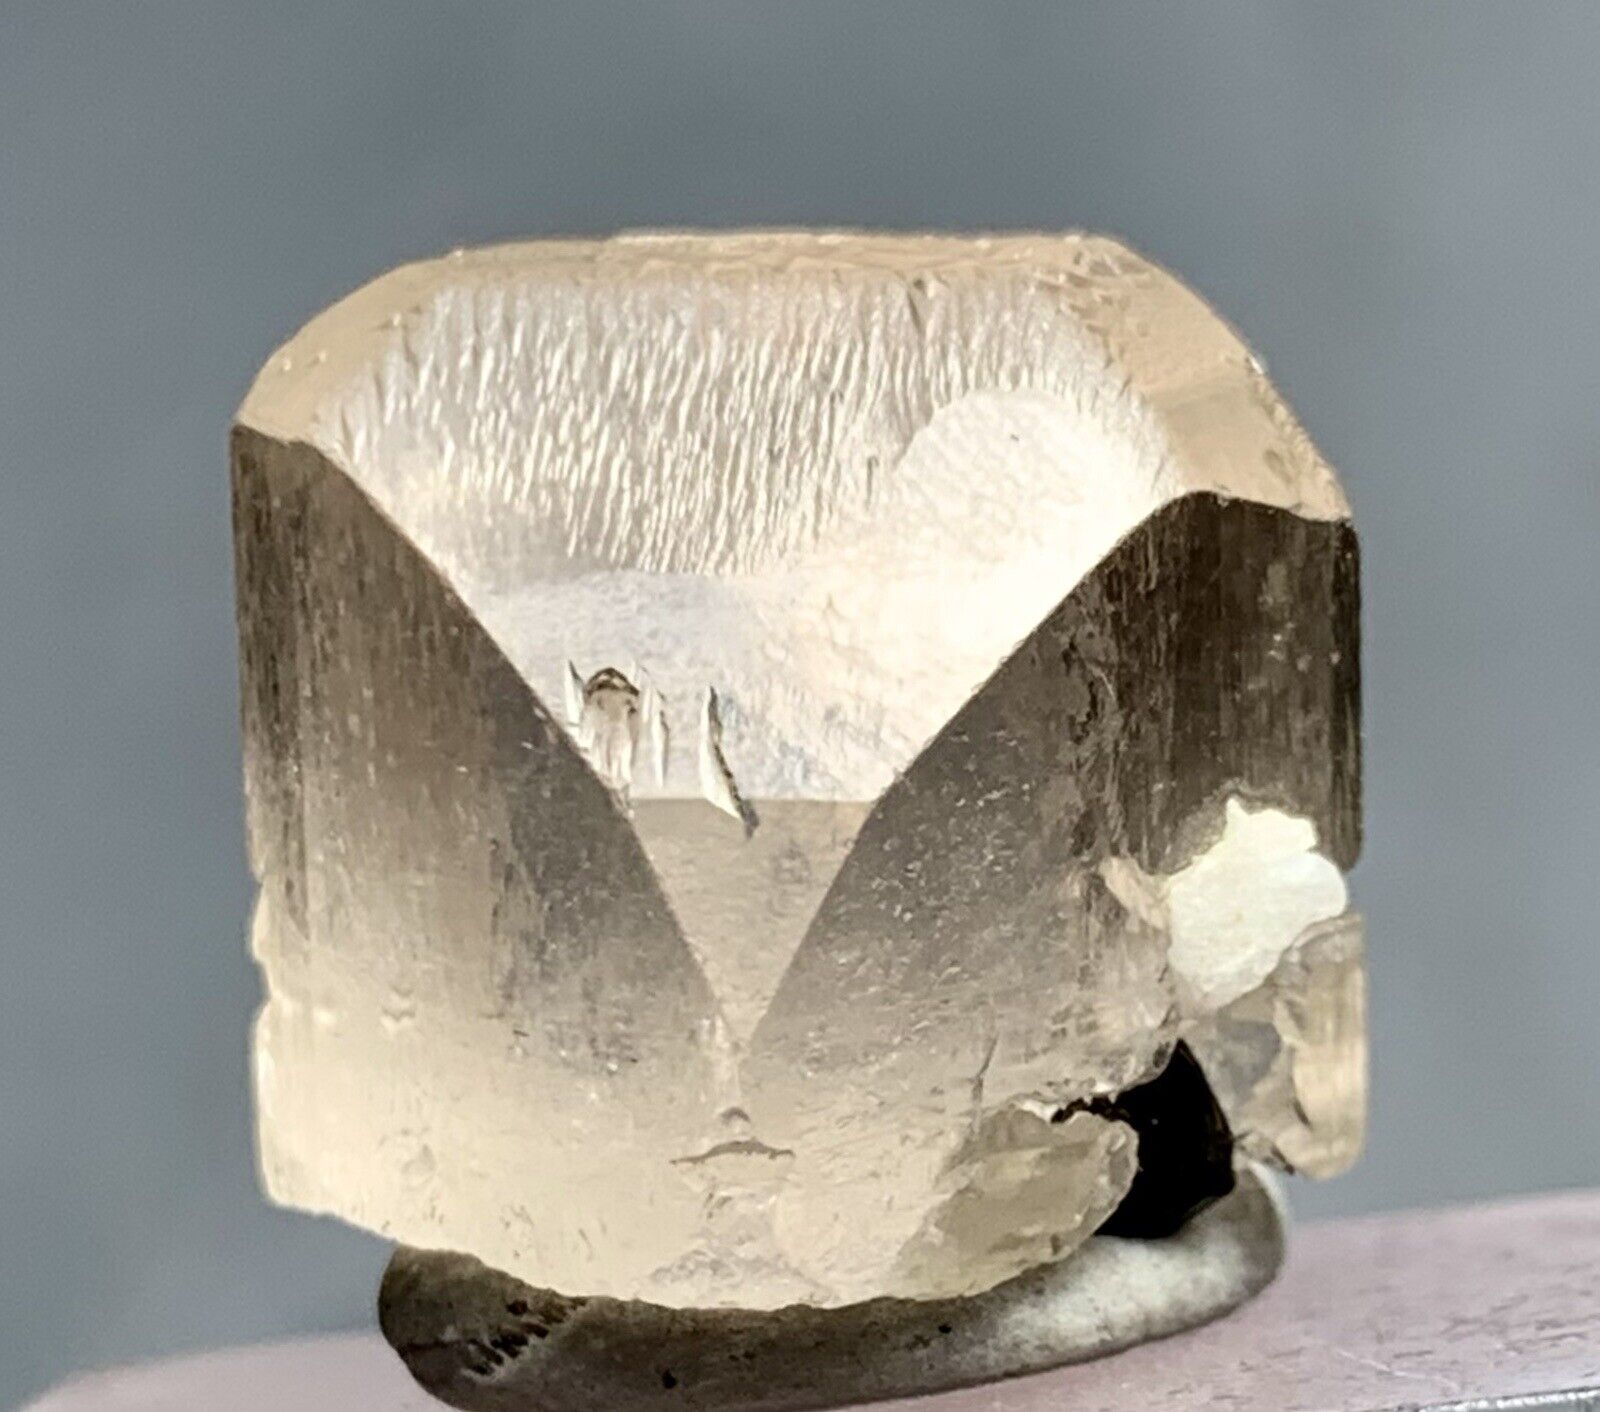 30 Carat Natural Topaz Crystal From Pakistan